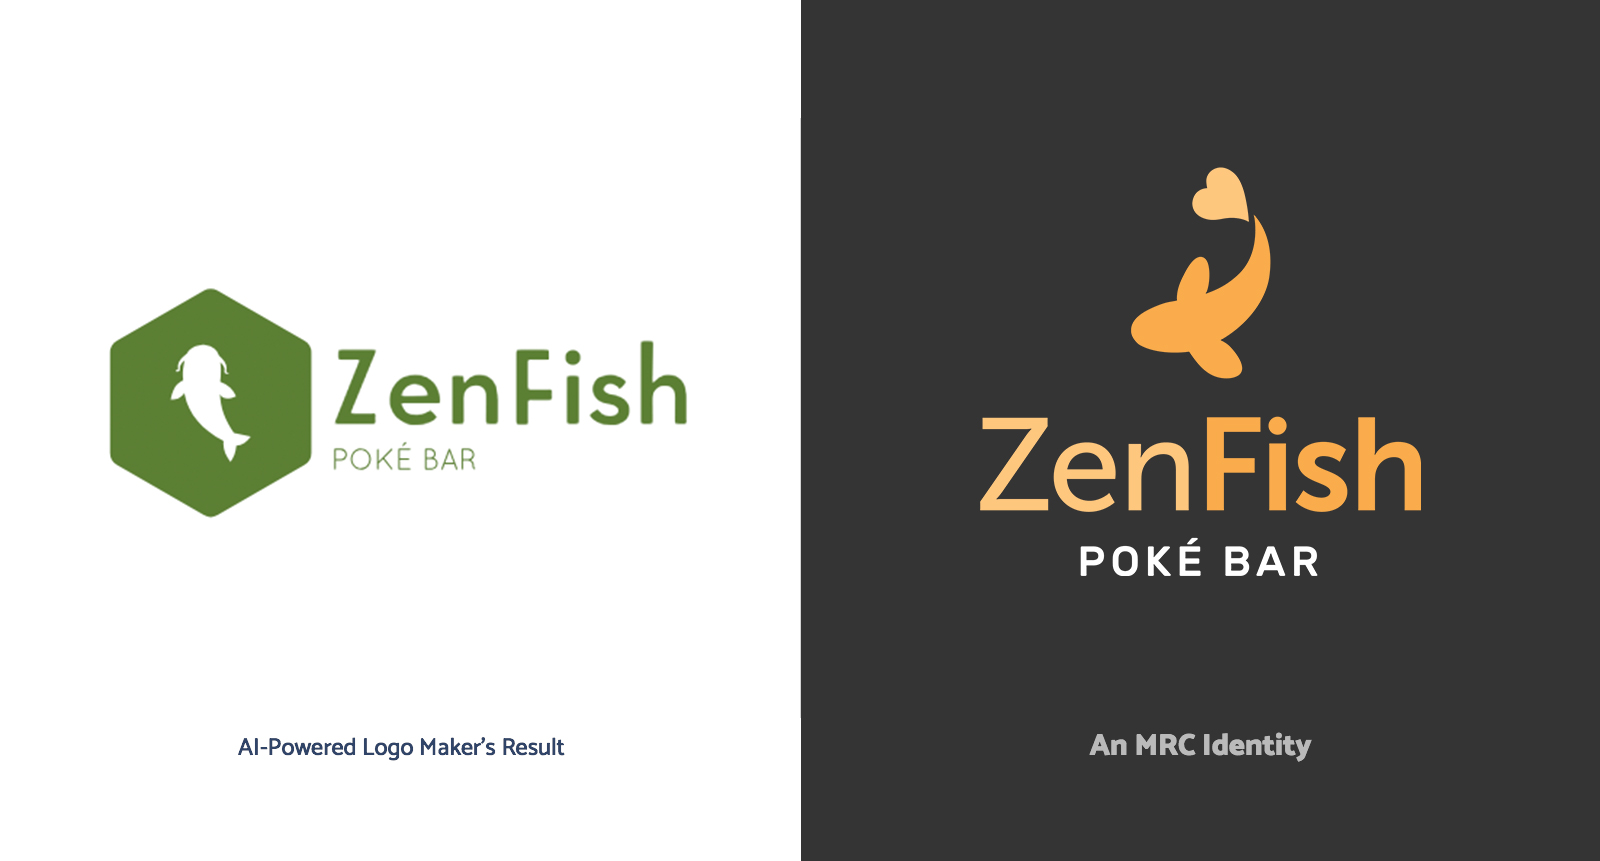 LogoJoy versus MRC Raleigh in a Logo Design Content for ZenFish Poke Bar